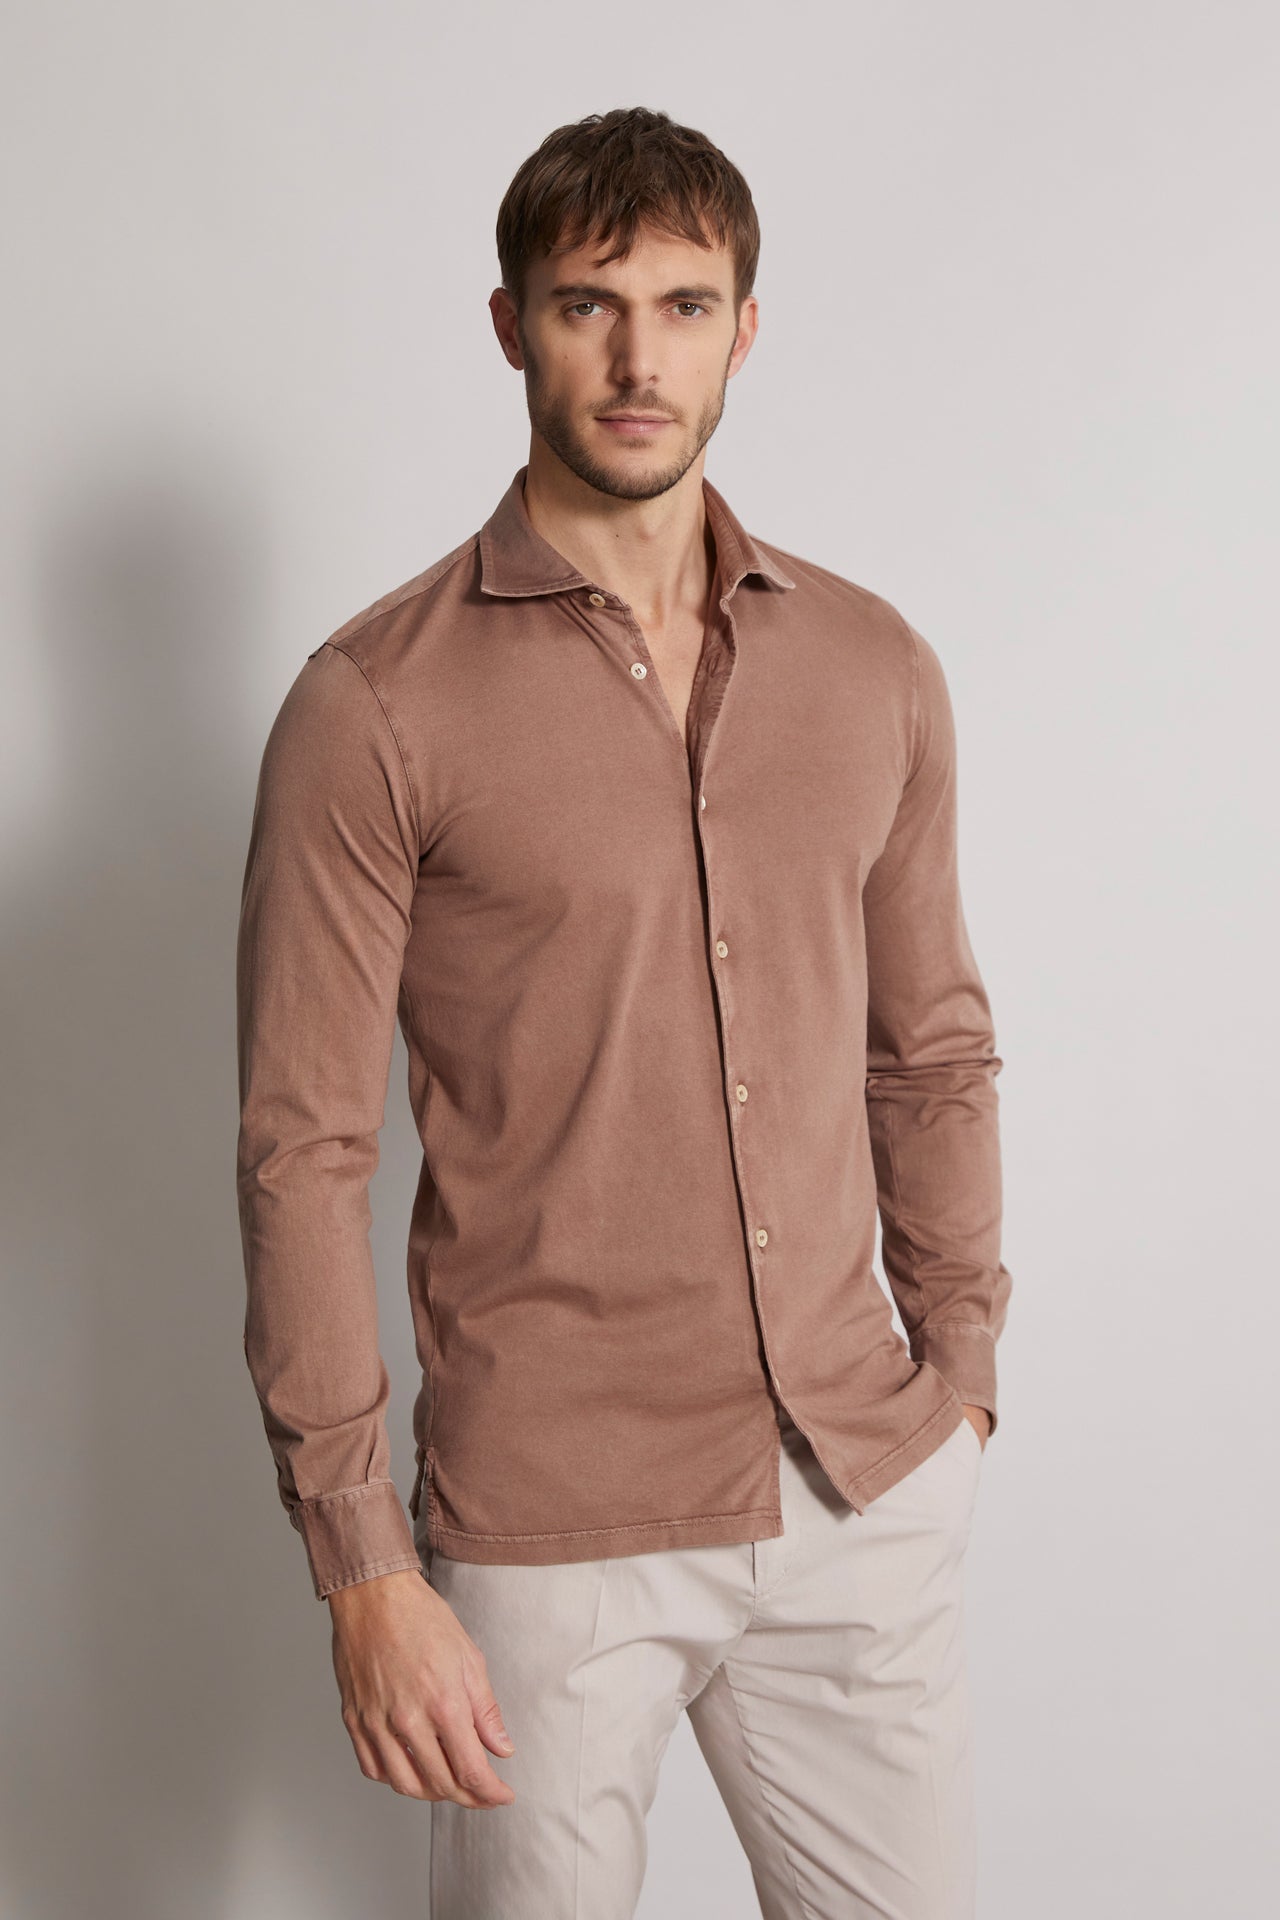 Organic Cotton Shirt - Long Sleeve - Brown - Front View